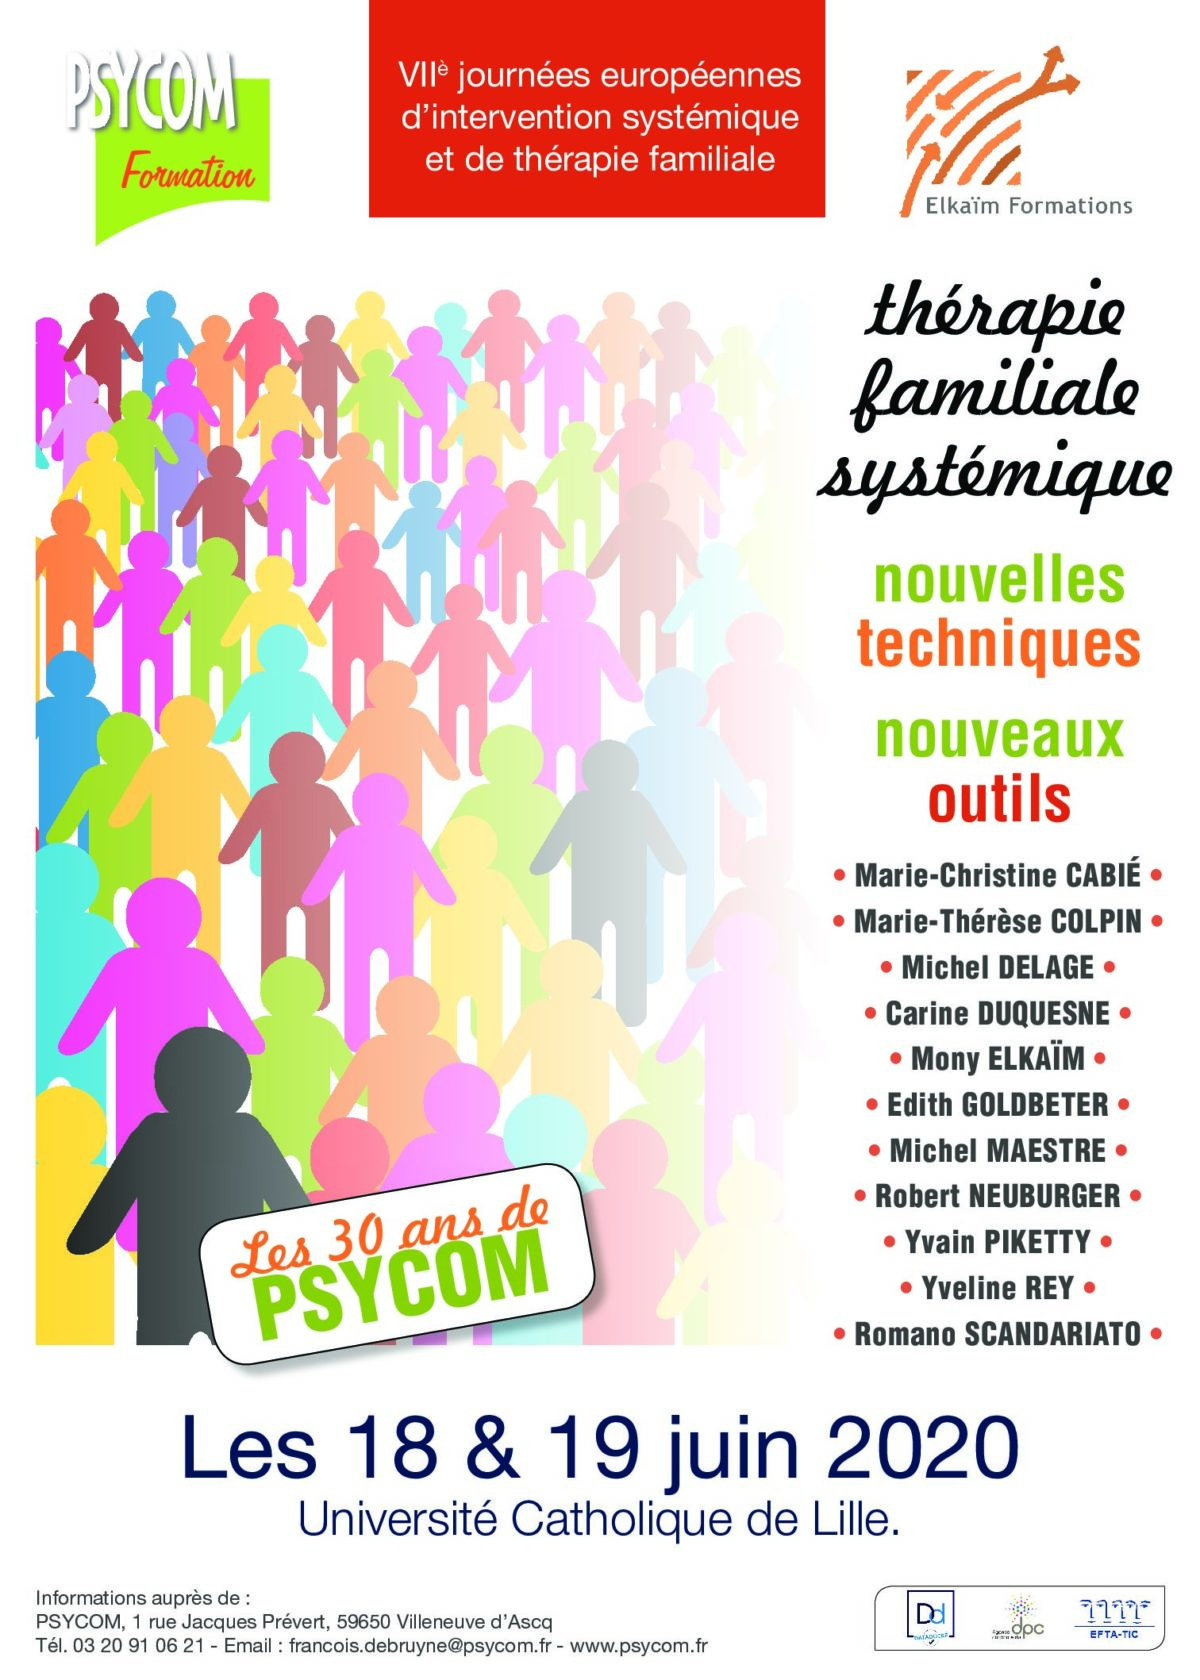 Psycom_Conference_Lille_0620-2-pdf-1200x1680.jpg